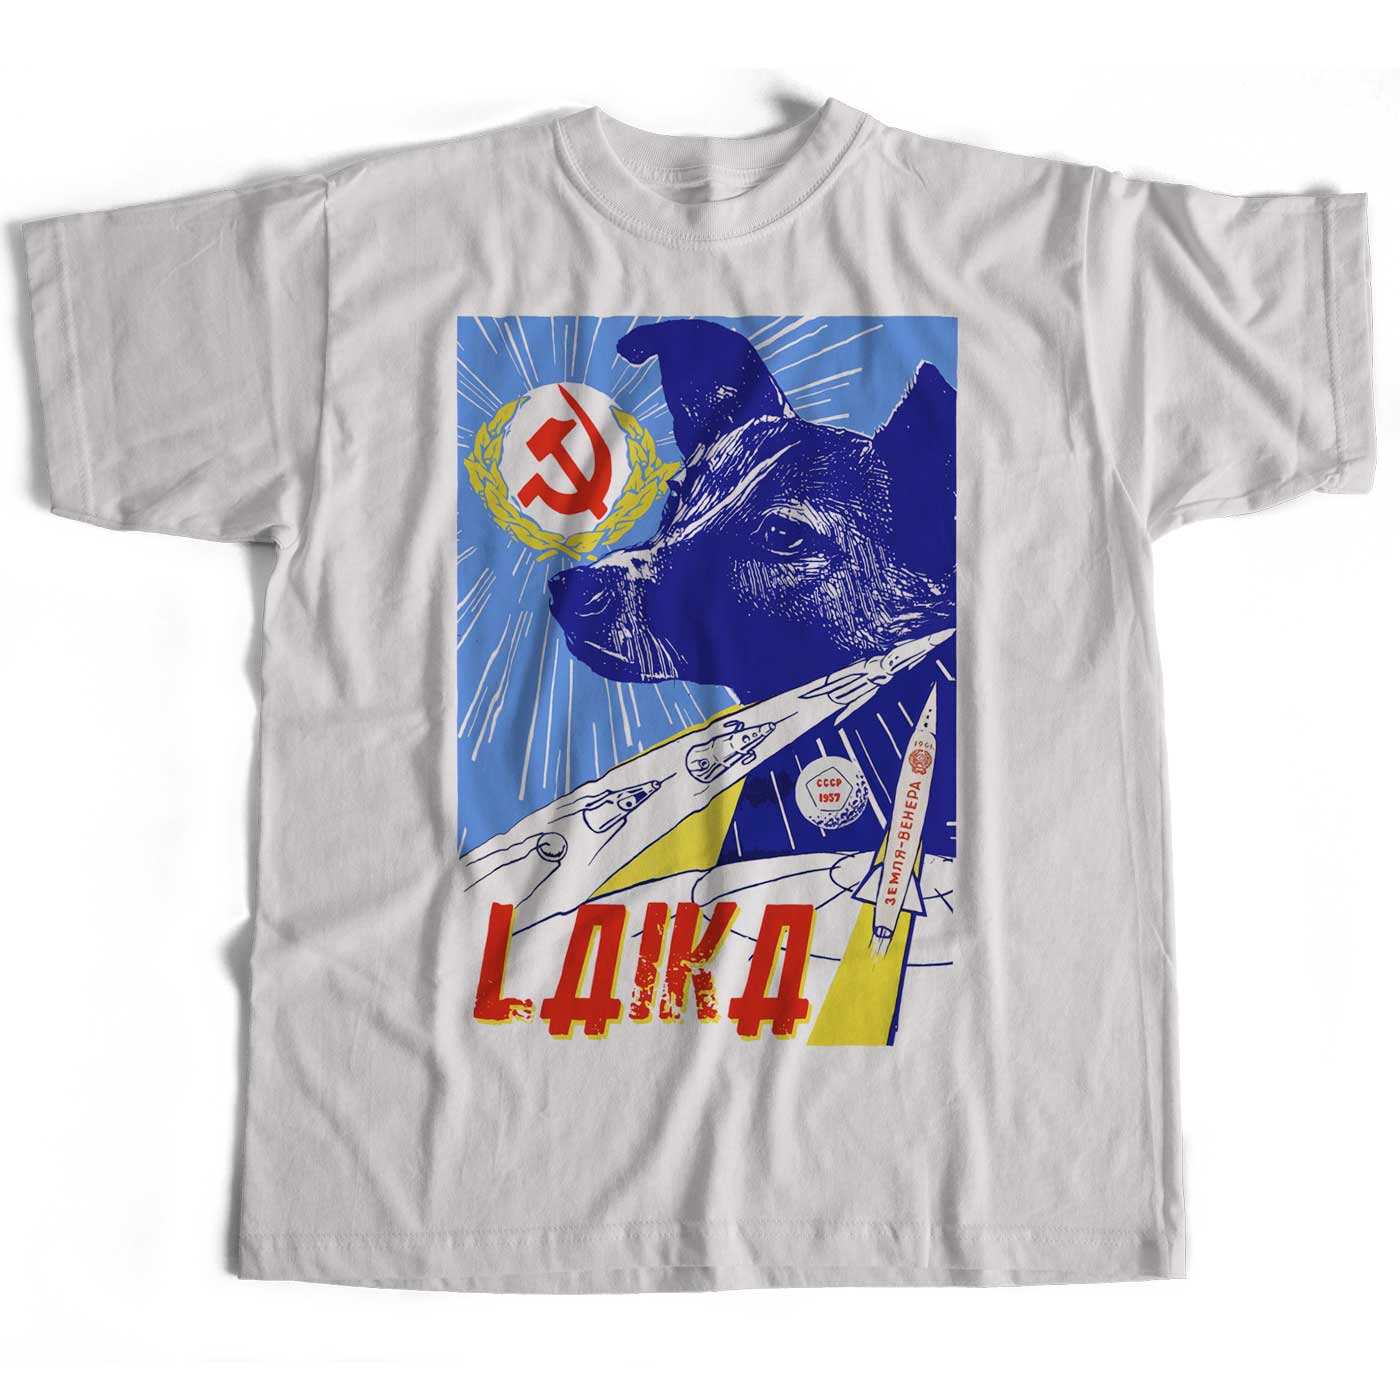 Space T Shirt - Laika The Space Dog CCCP Russia Soviet Era Poster